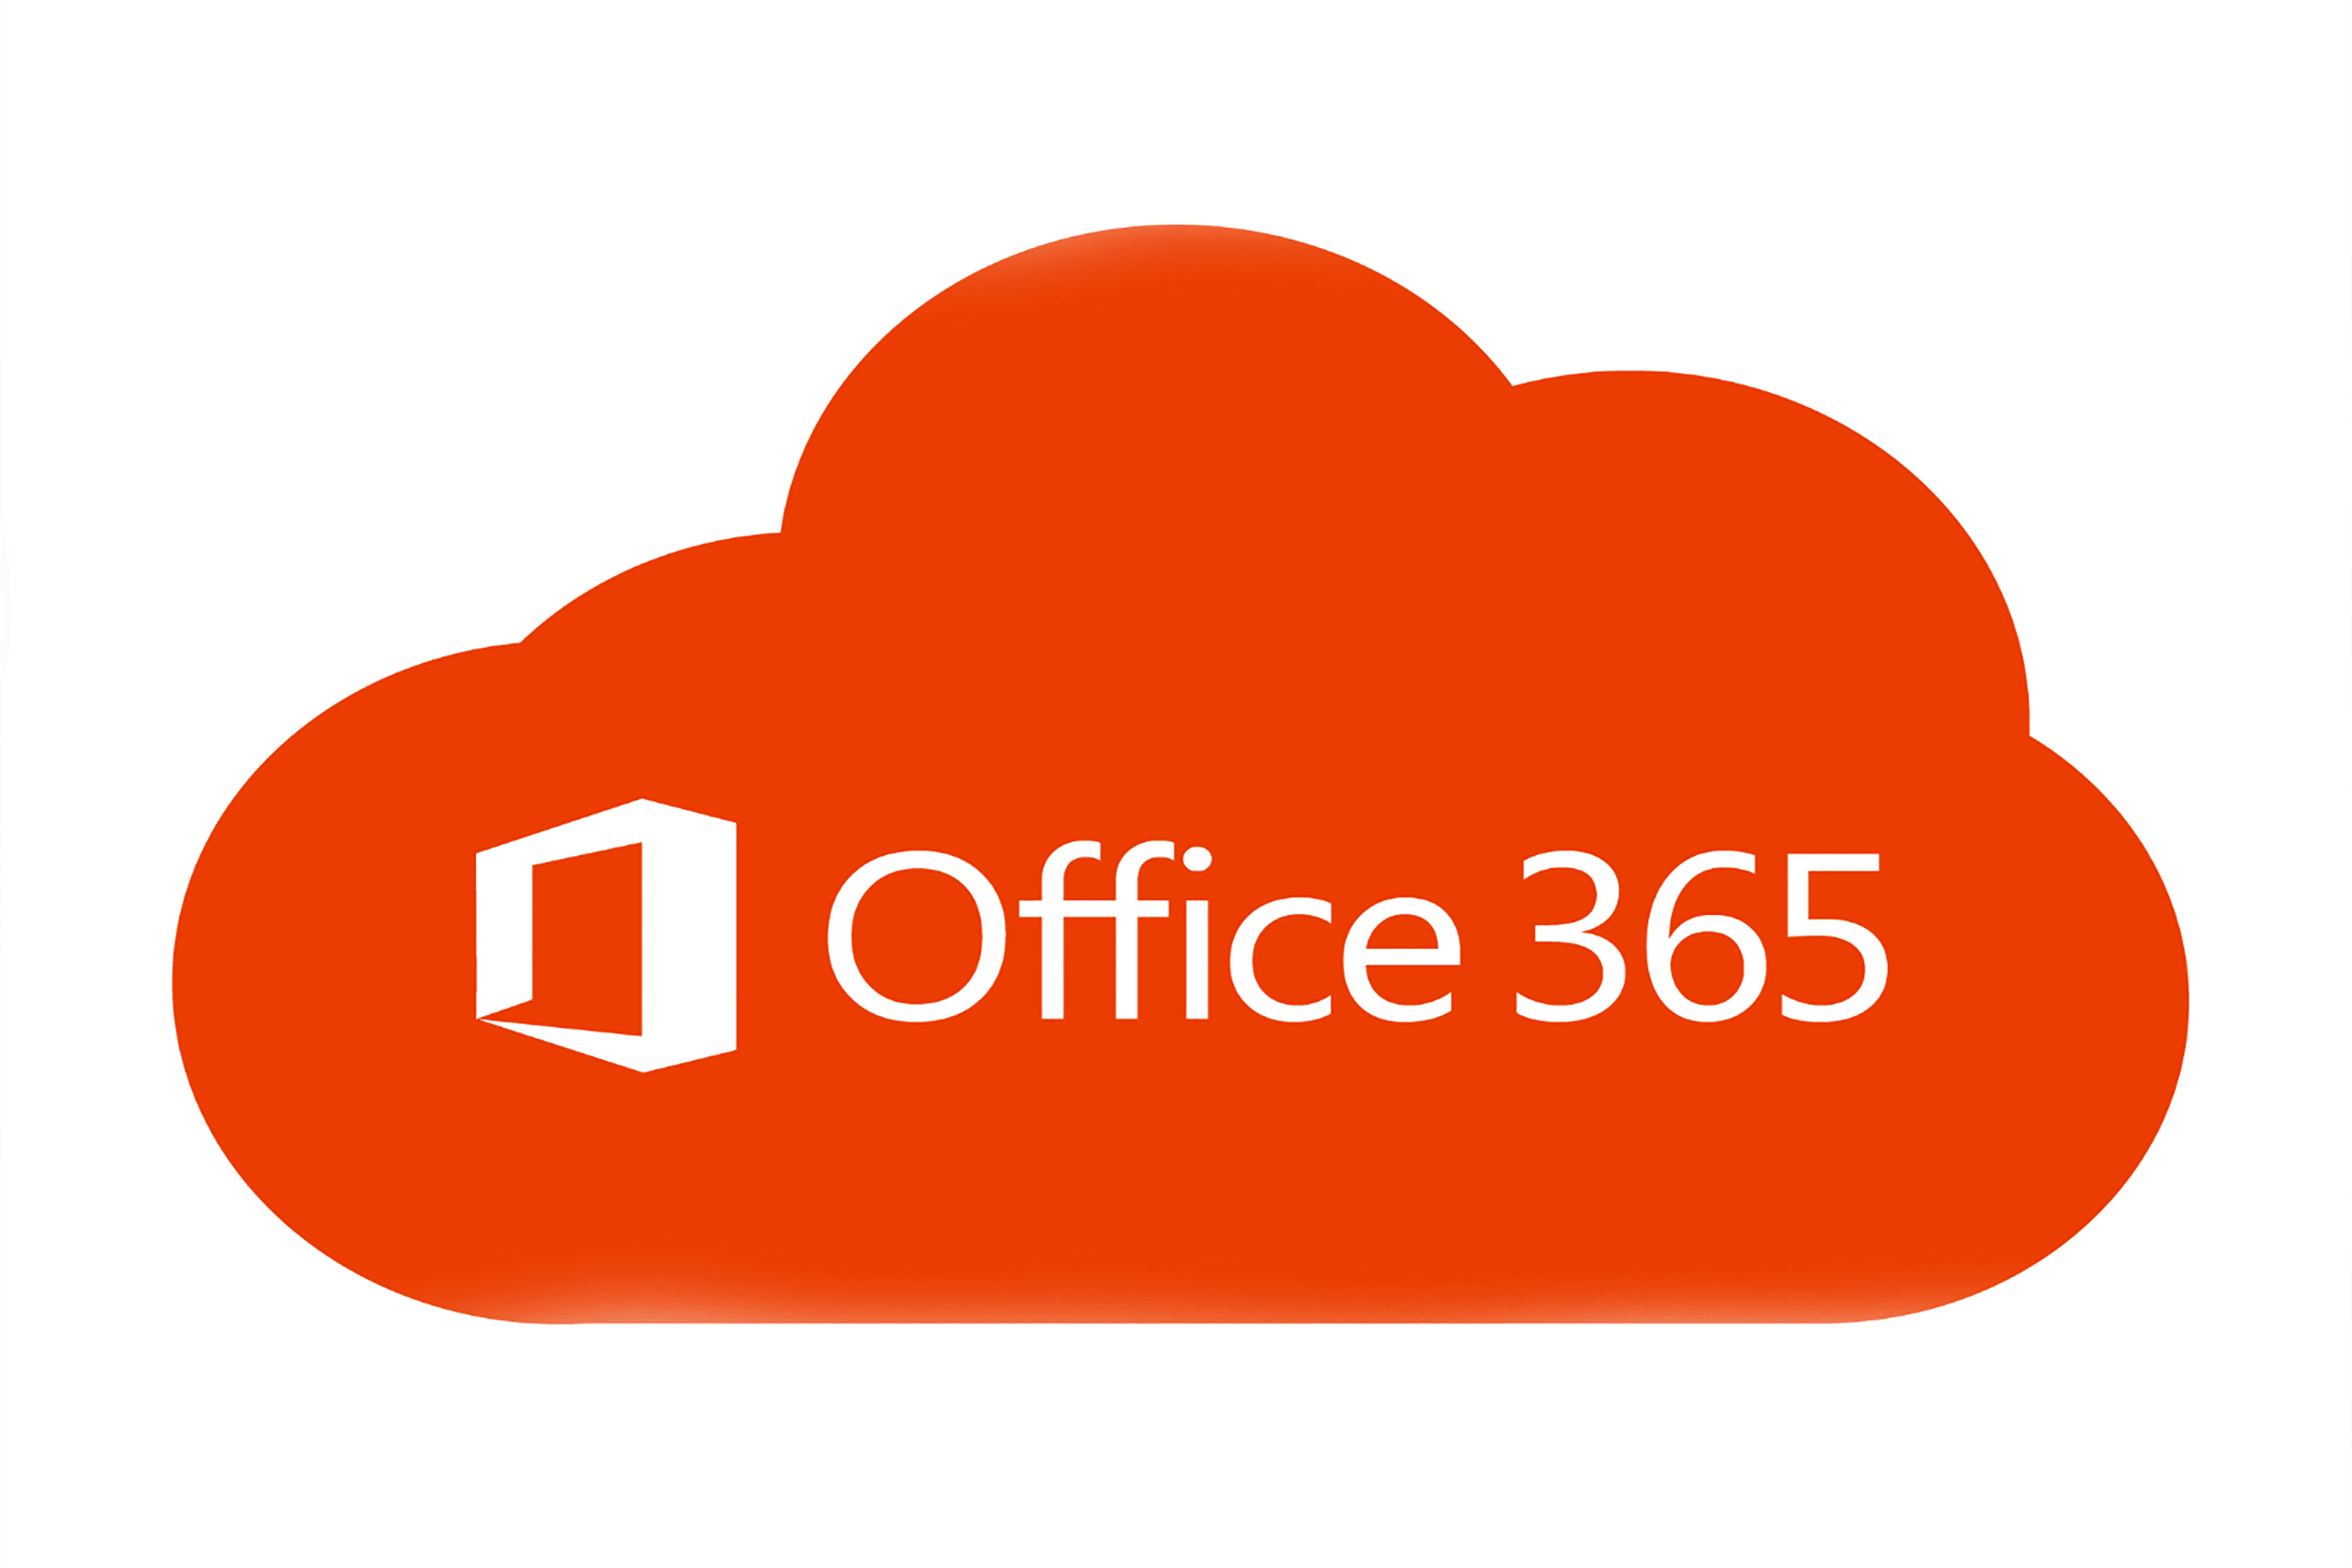 Office 365 cloud